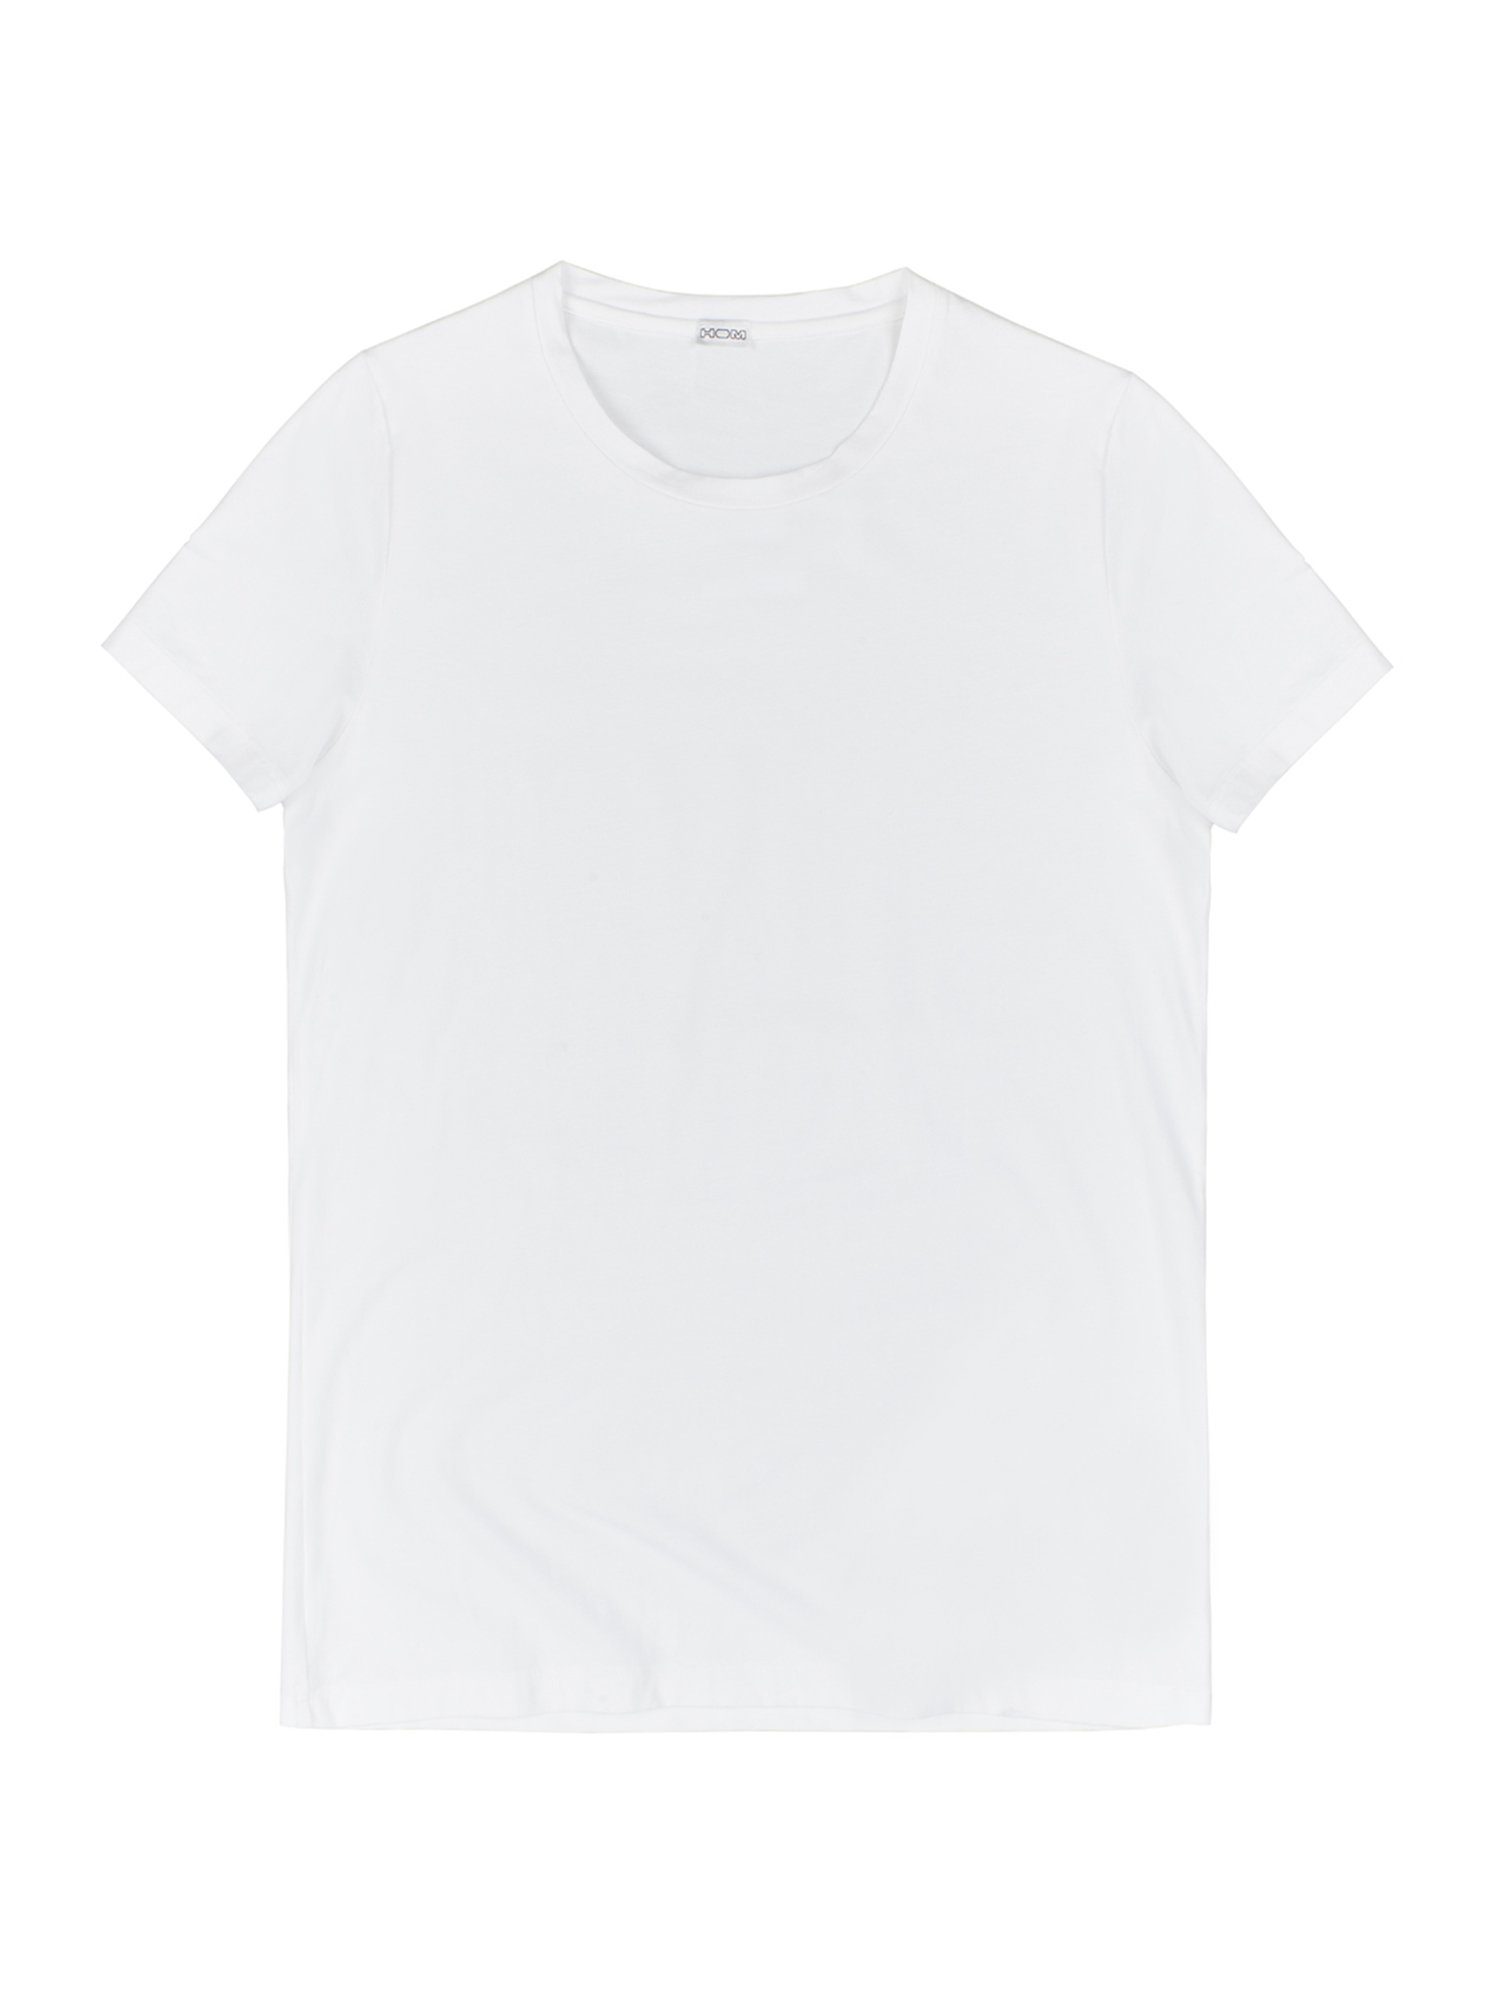 Hom T-Shirt Crew Neck Cupreme Cotton white